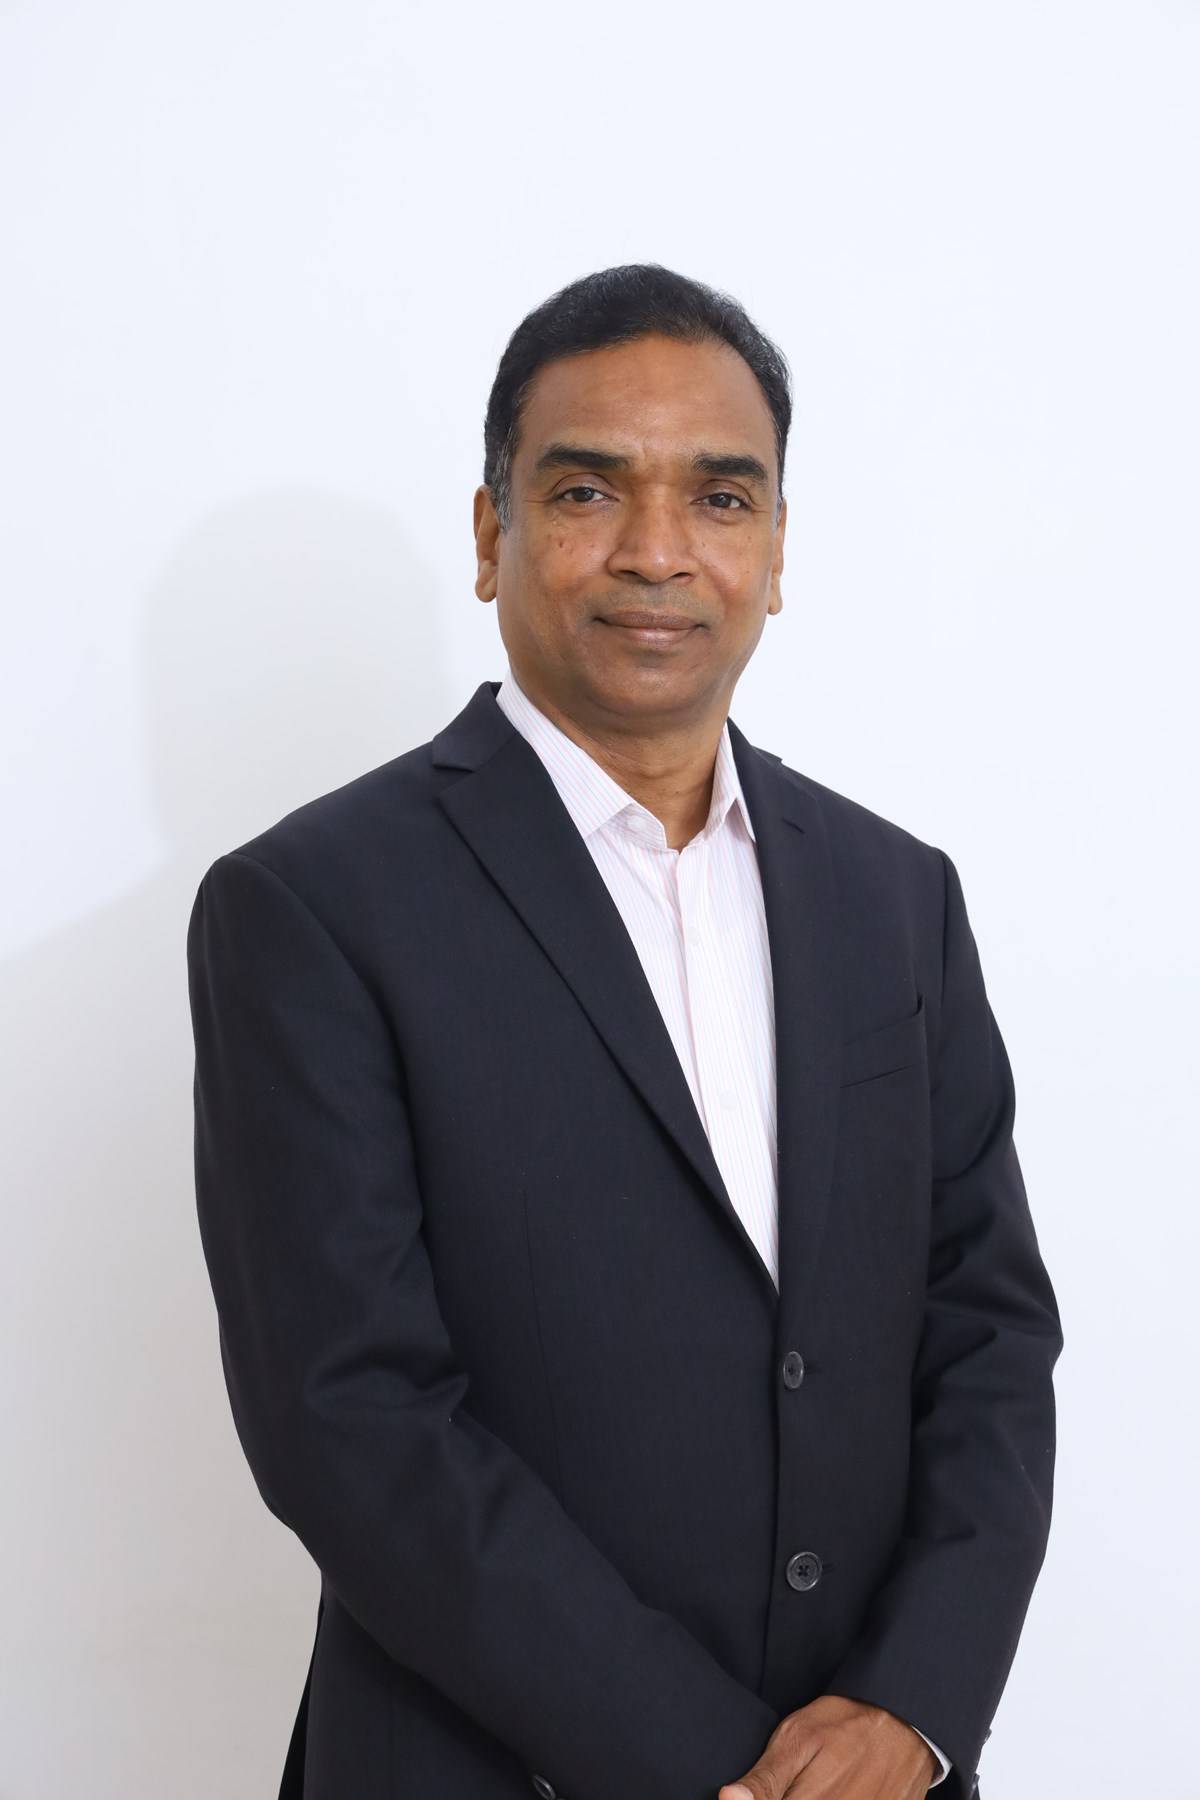 Mr. M. C. Dominic, Editor-in-Chief, Krishi Jagran & Agriculture World